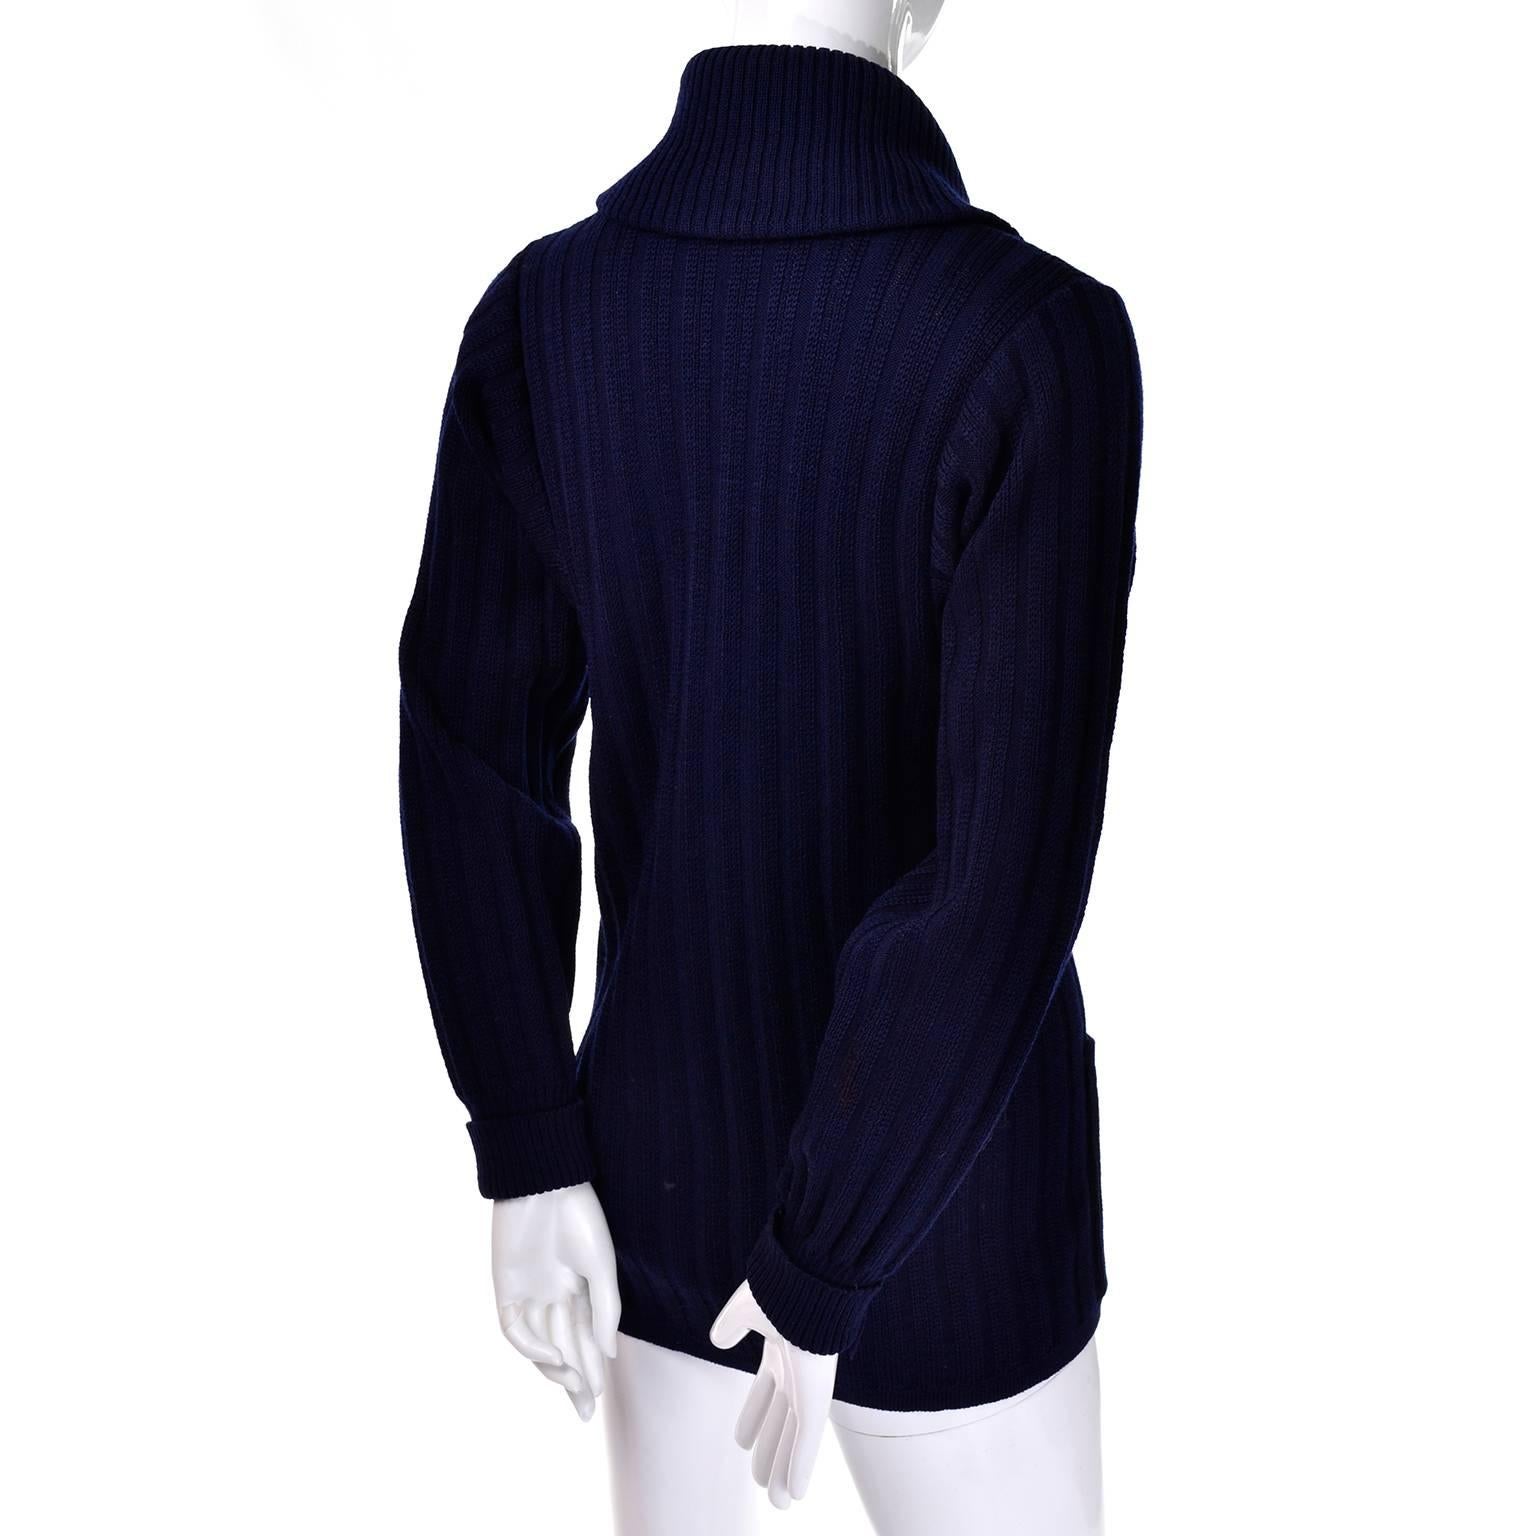 navy blue cardigan sweater